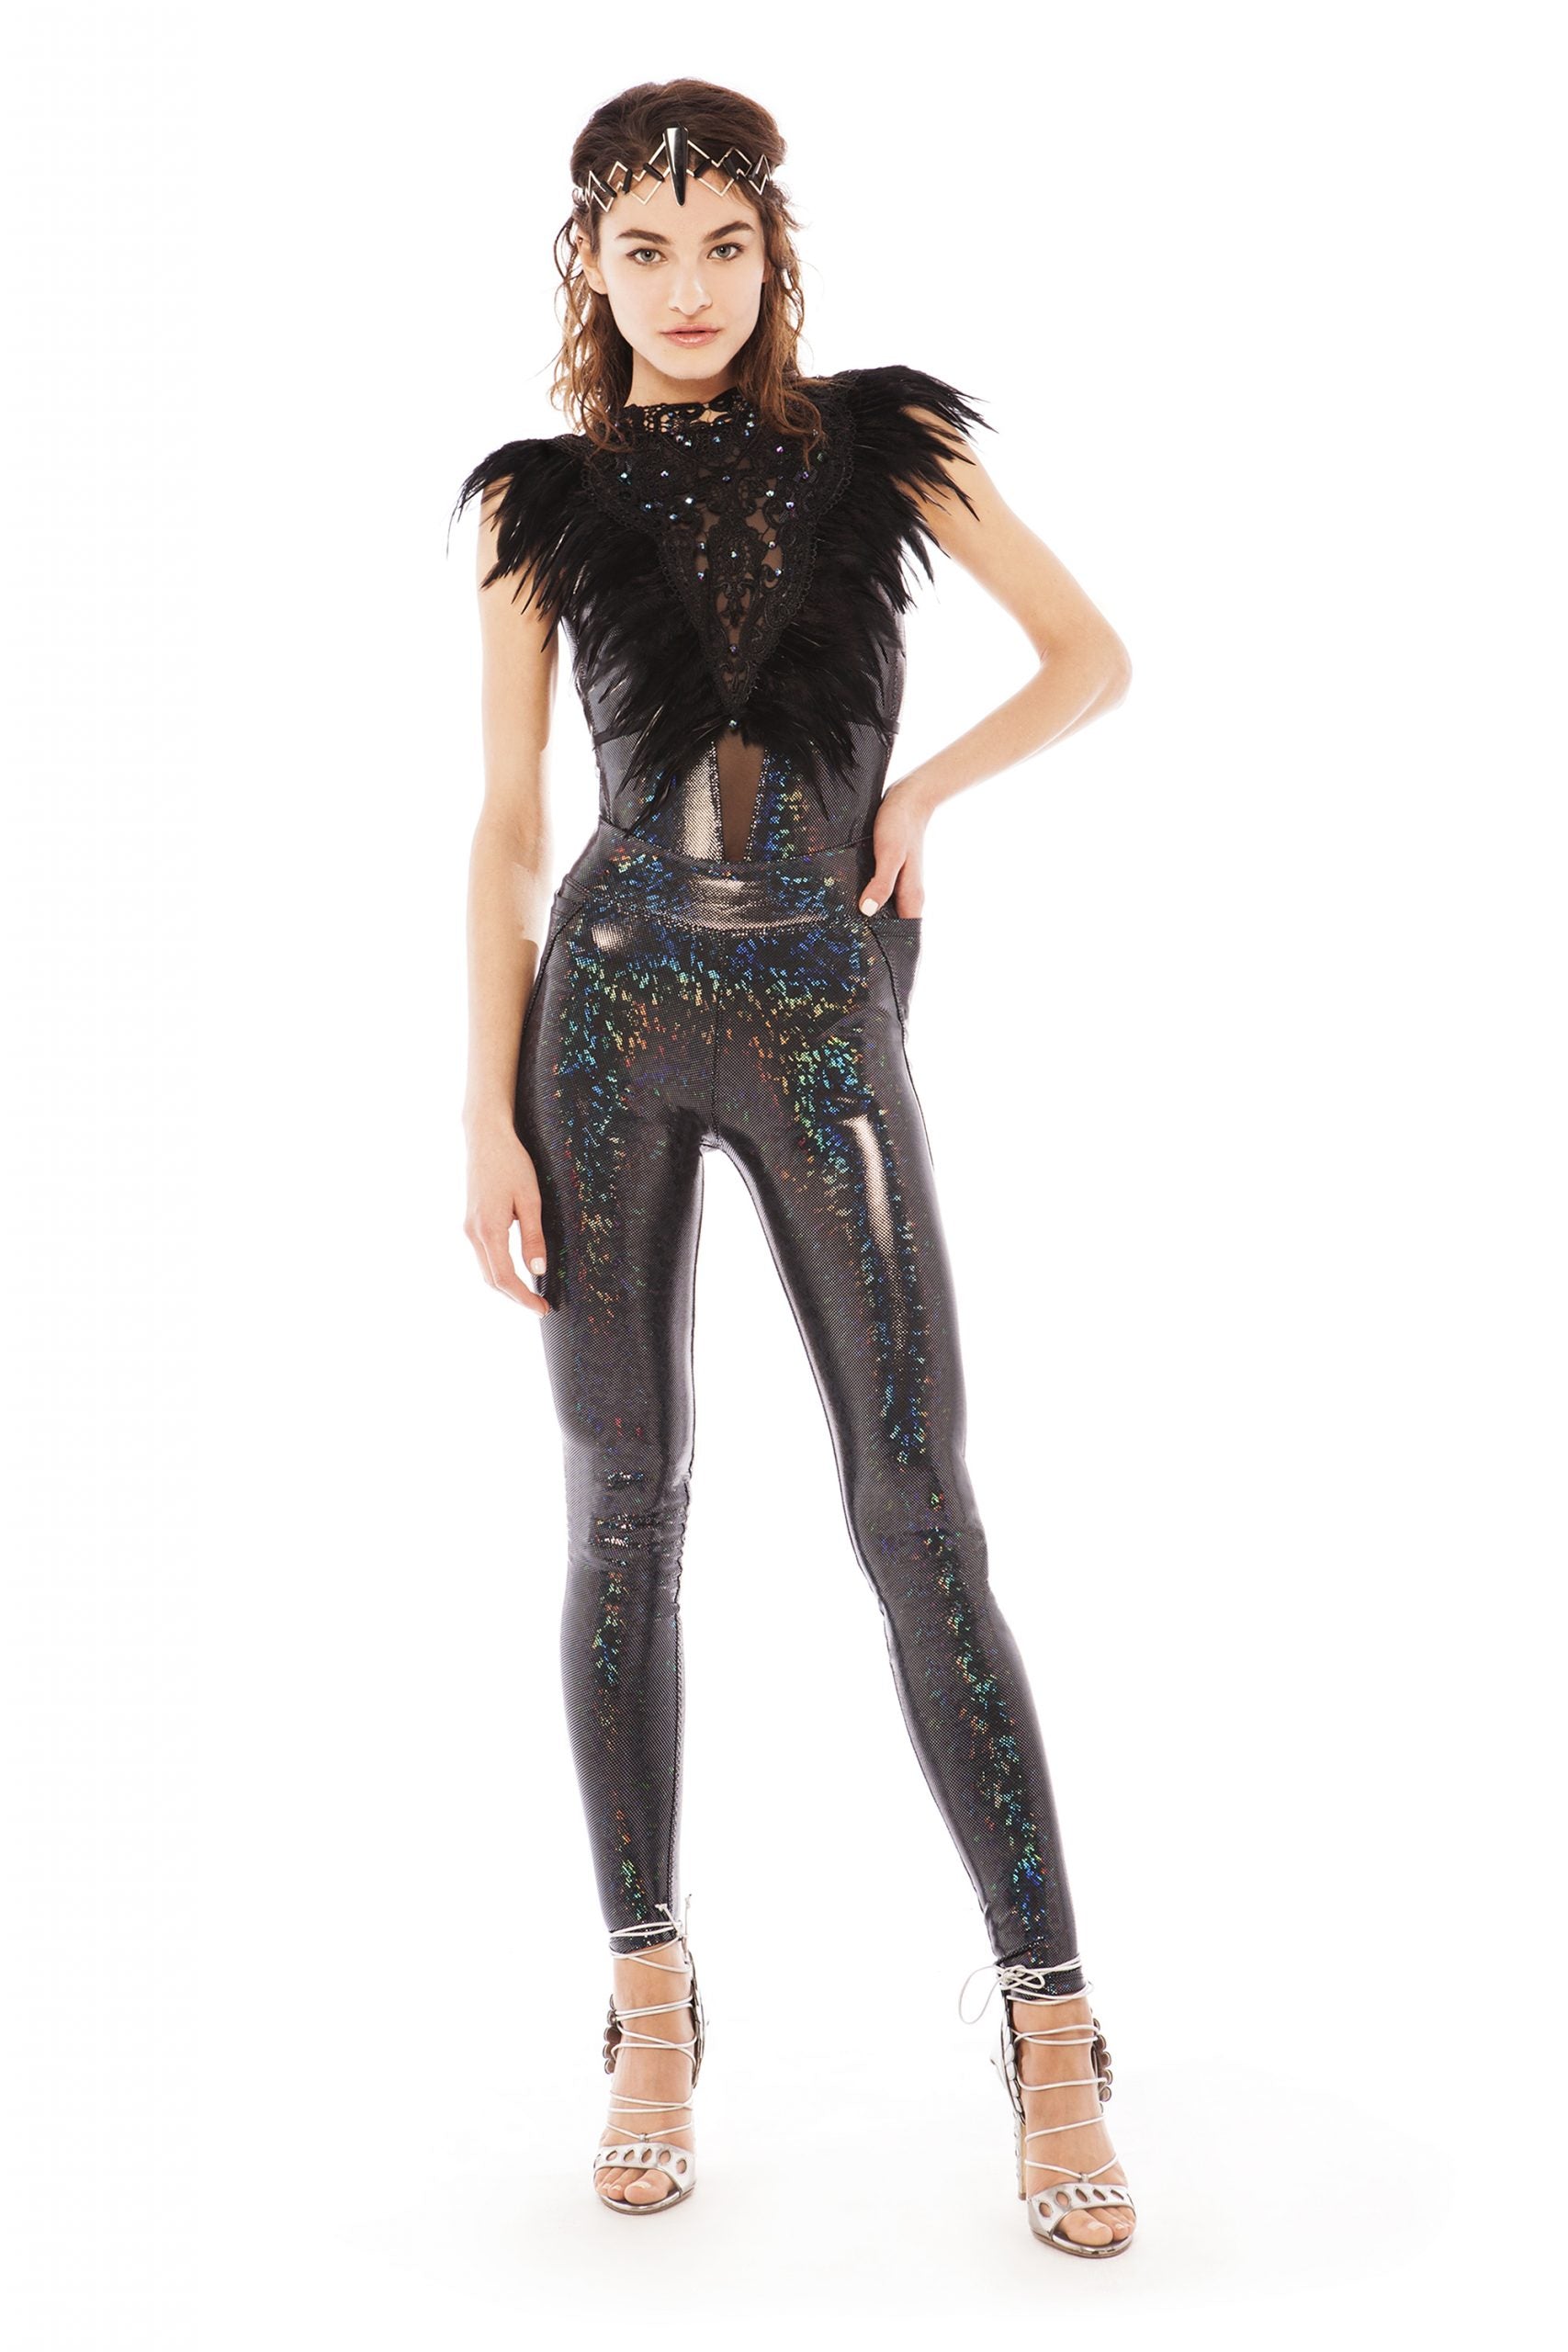 GUC* Beach riot high waisted black hologram sparkle holographic leggings  medium